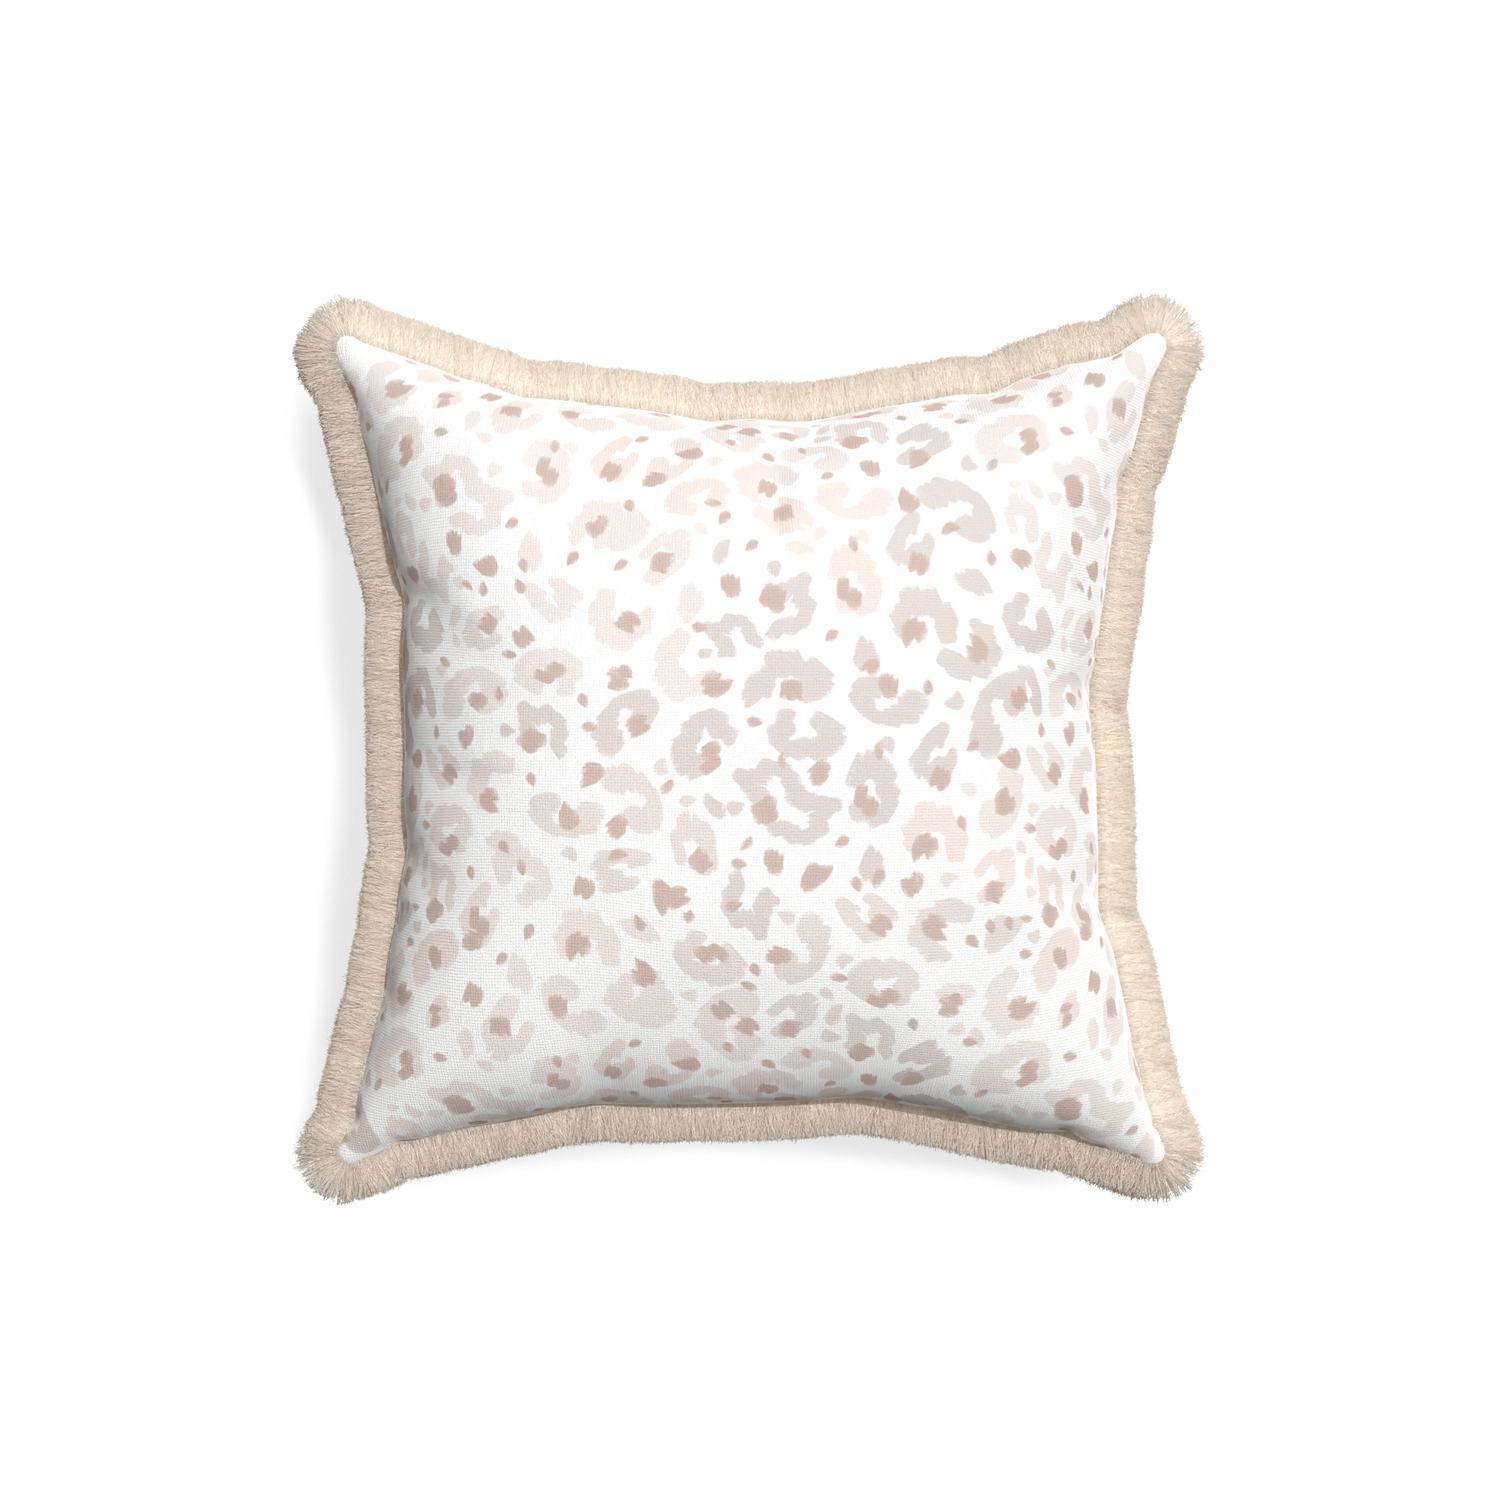 18-square rosie custom pillow with cream fringe on white background